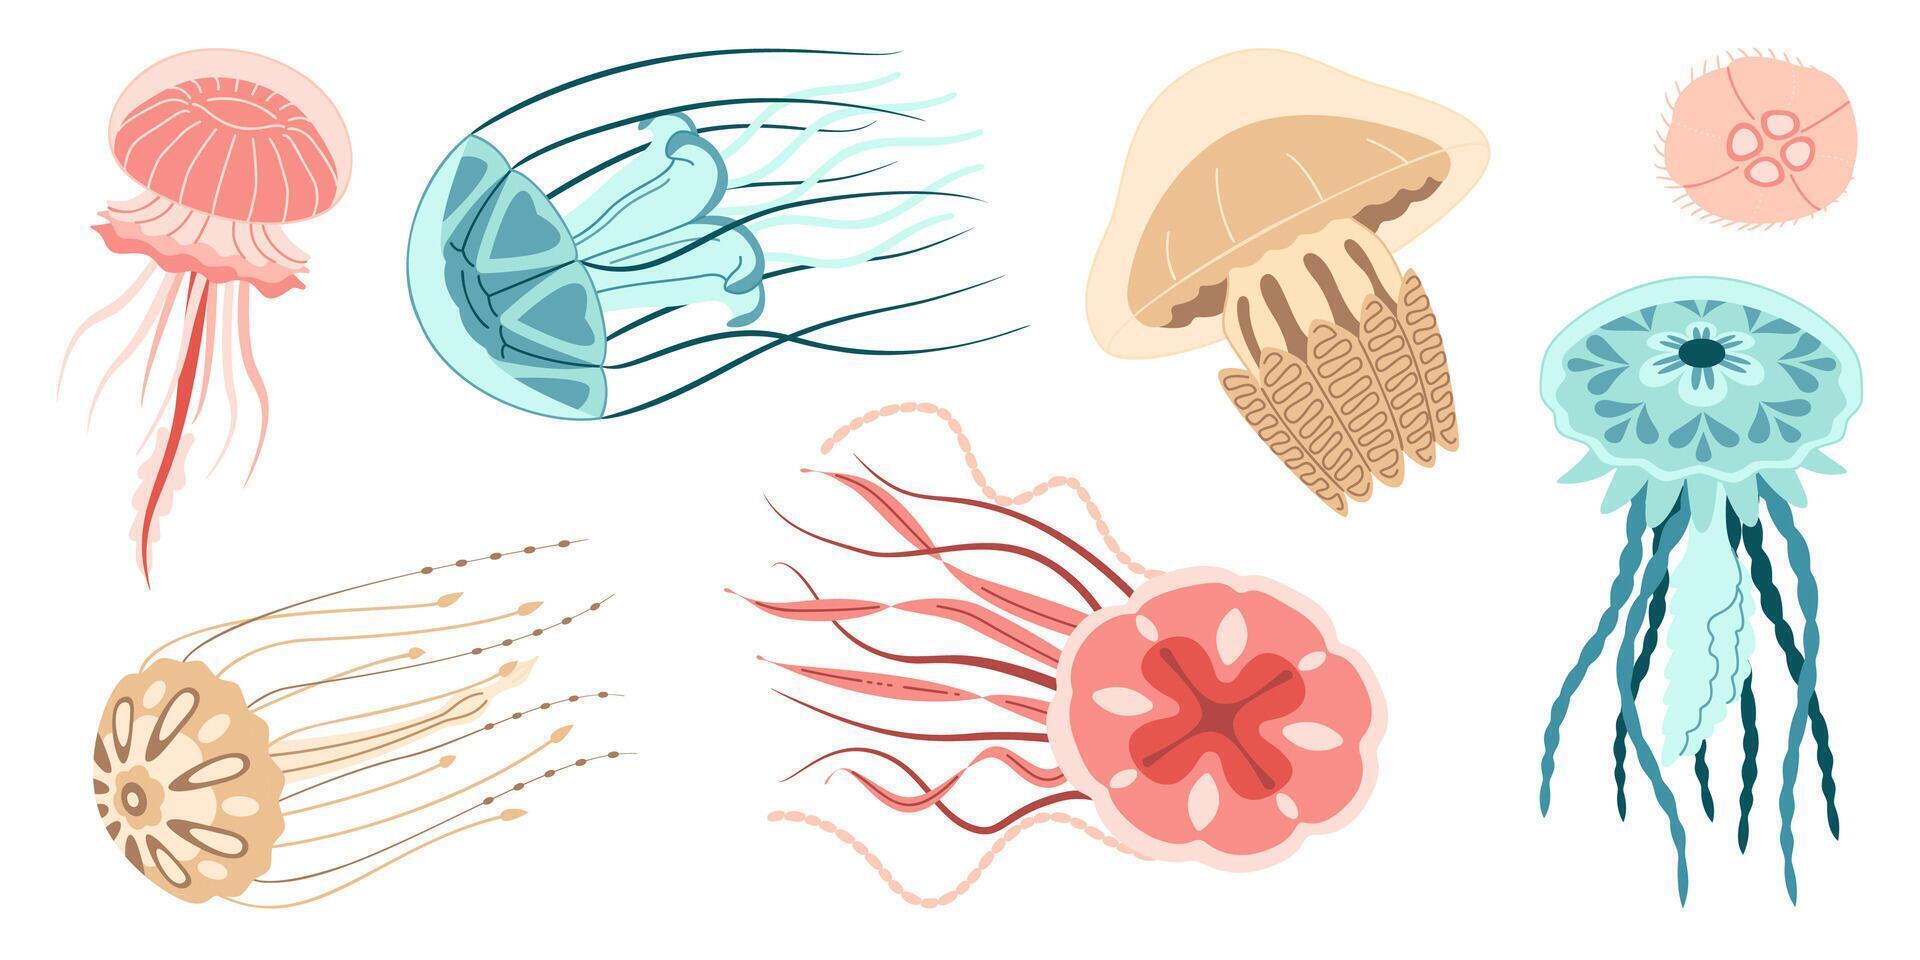 Jellyfish cartoon icon collection. Medusa trendy flat style icon set. Isolated on white background. illustration vector